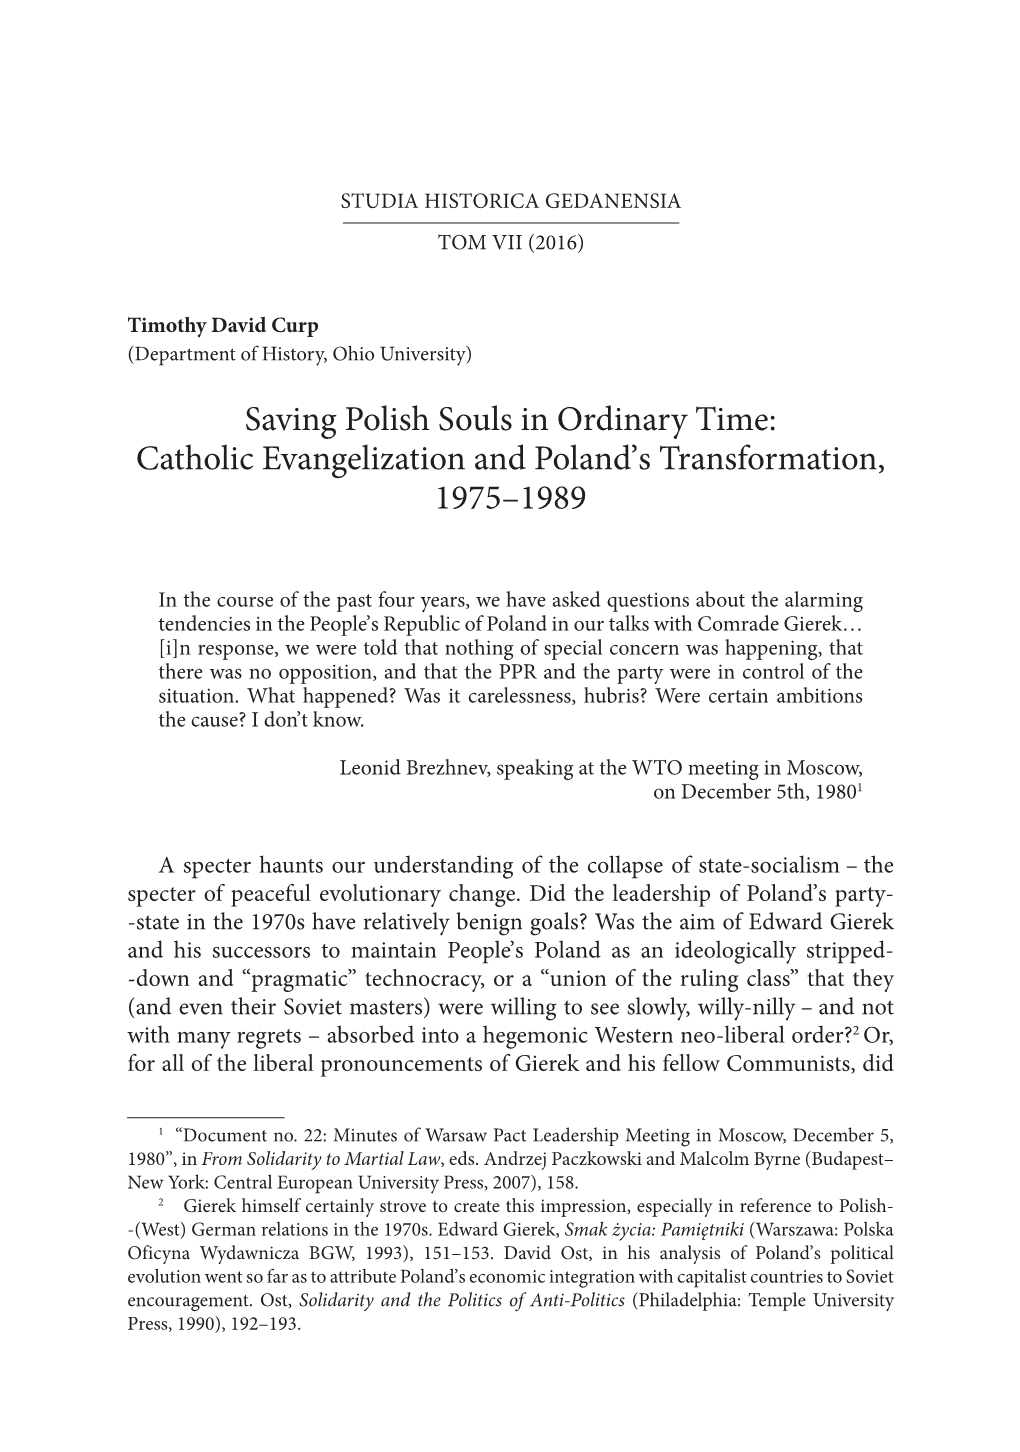 Catholic Evangelization and Poland's Transformation, 1975–1989